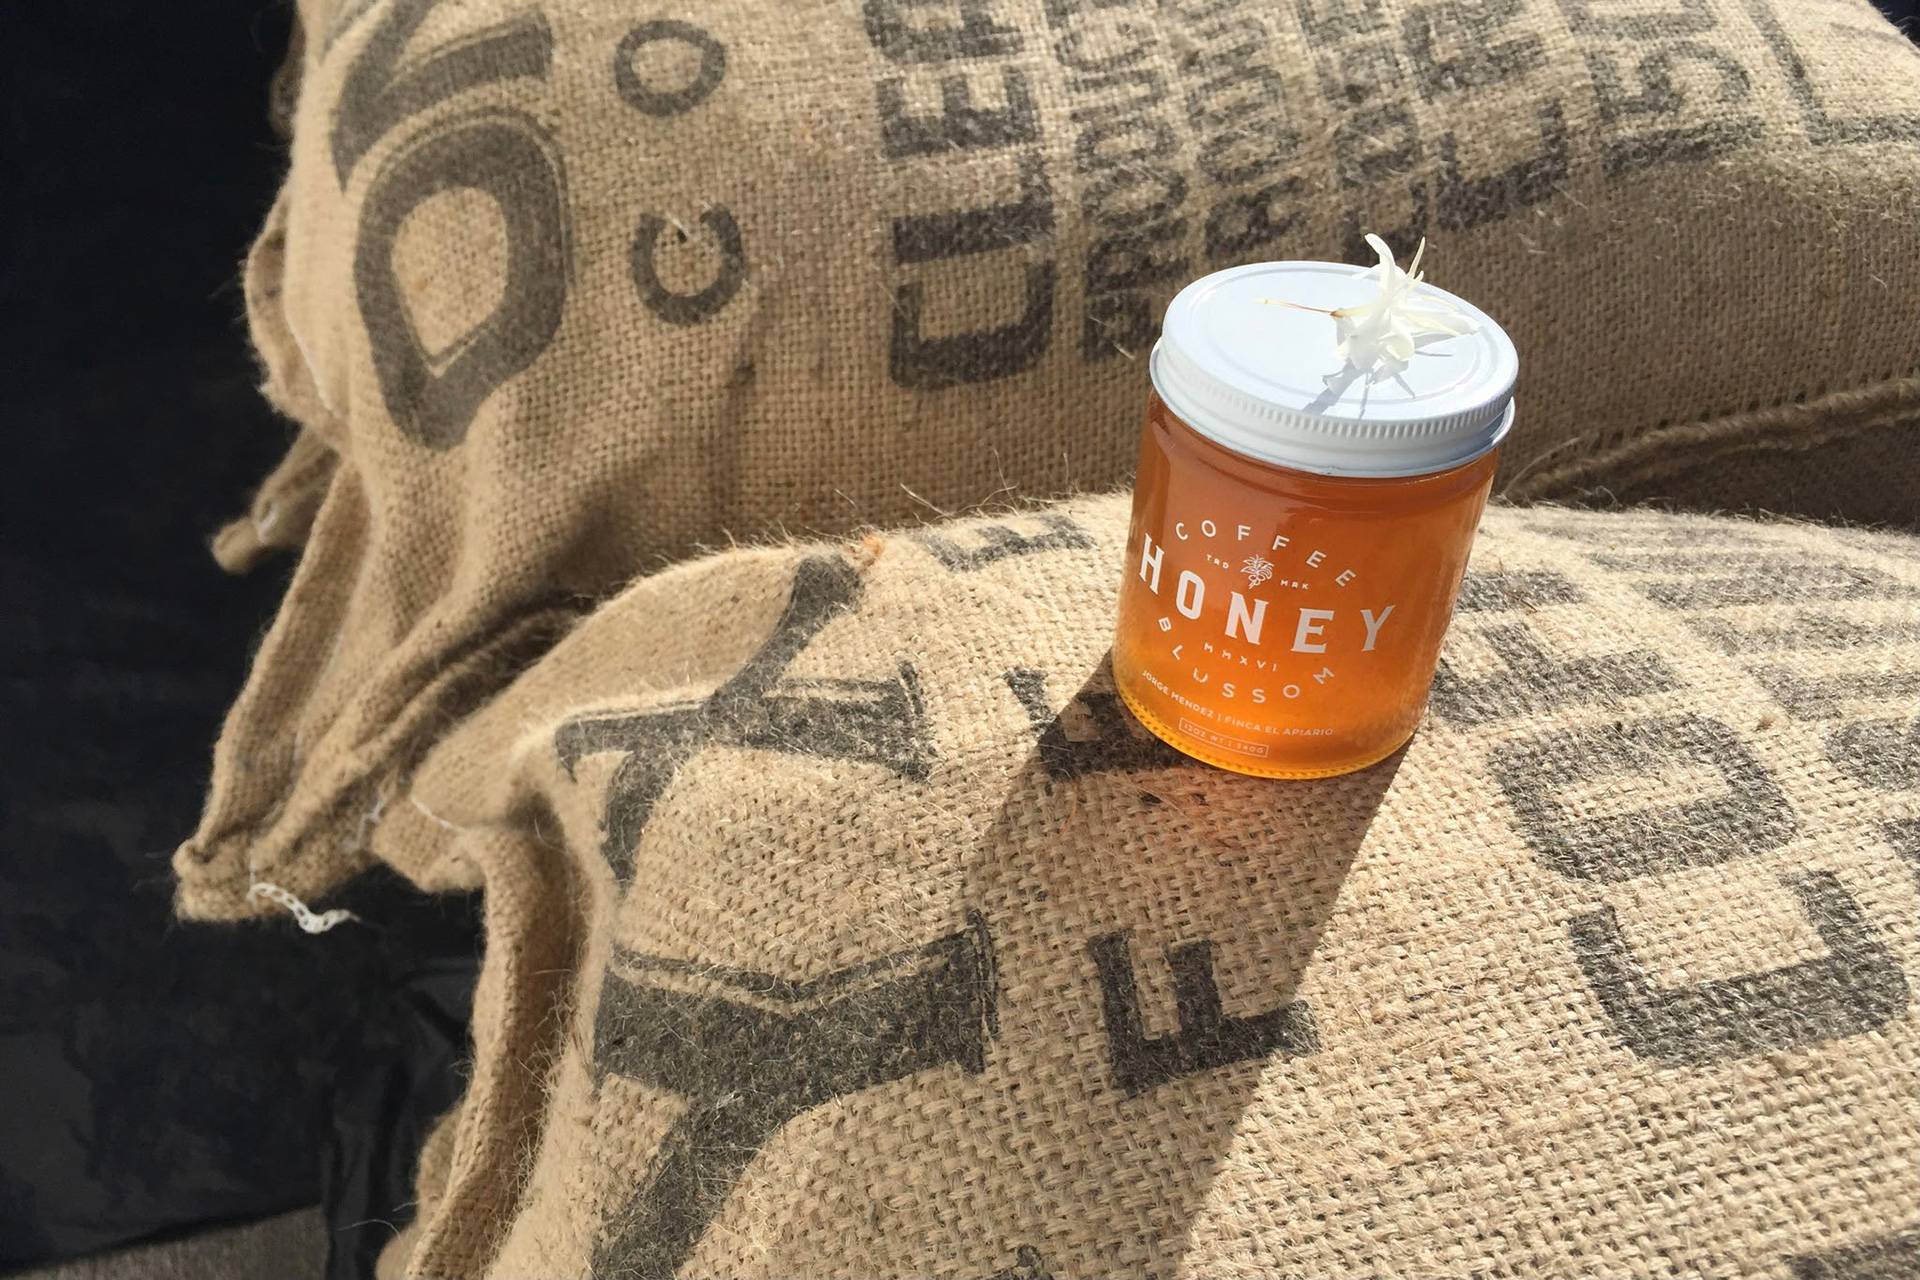 coffee blossom hhoney jar onyx bag